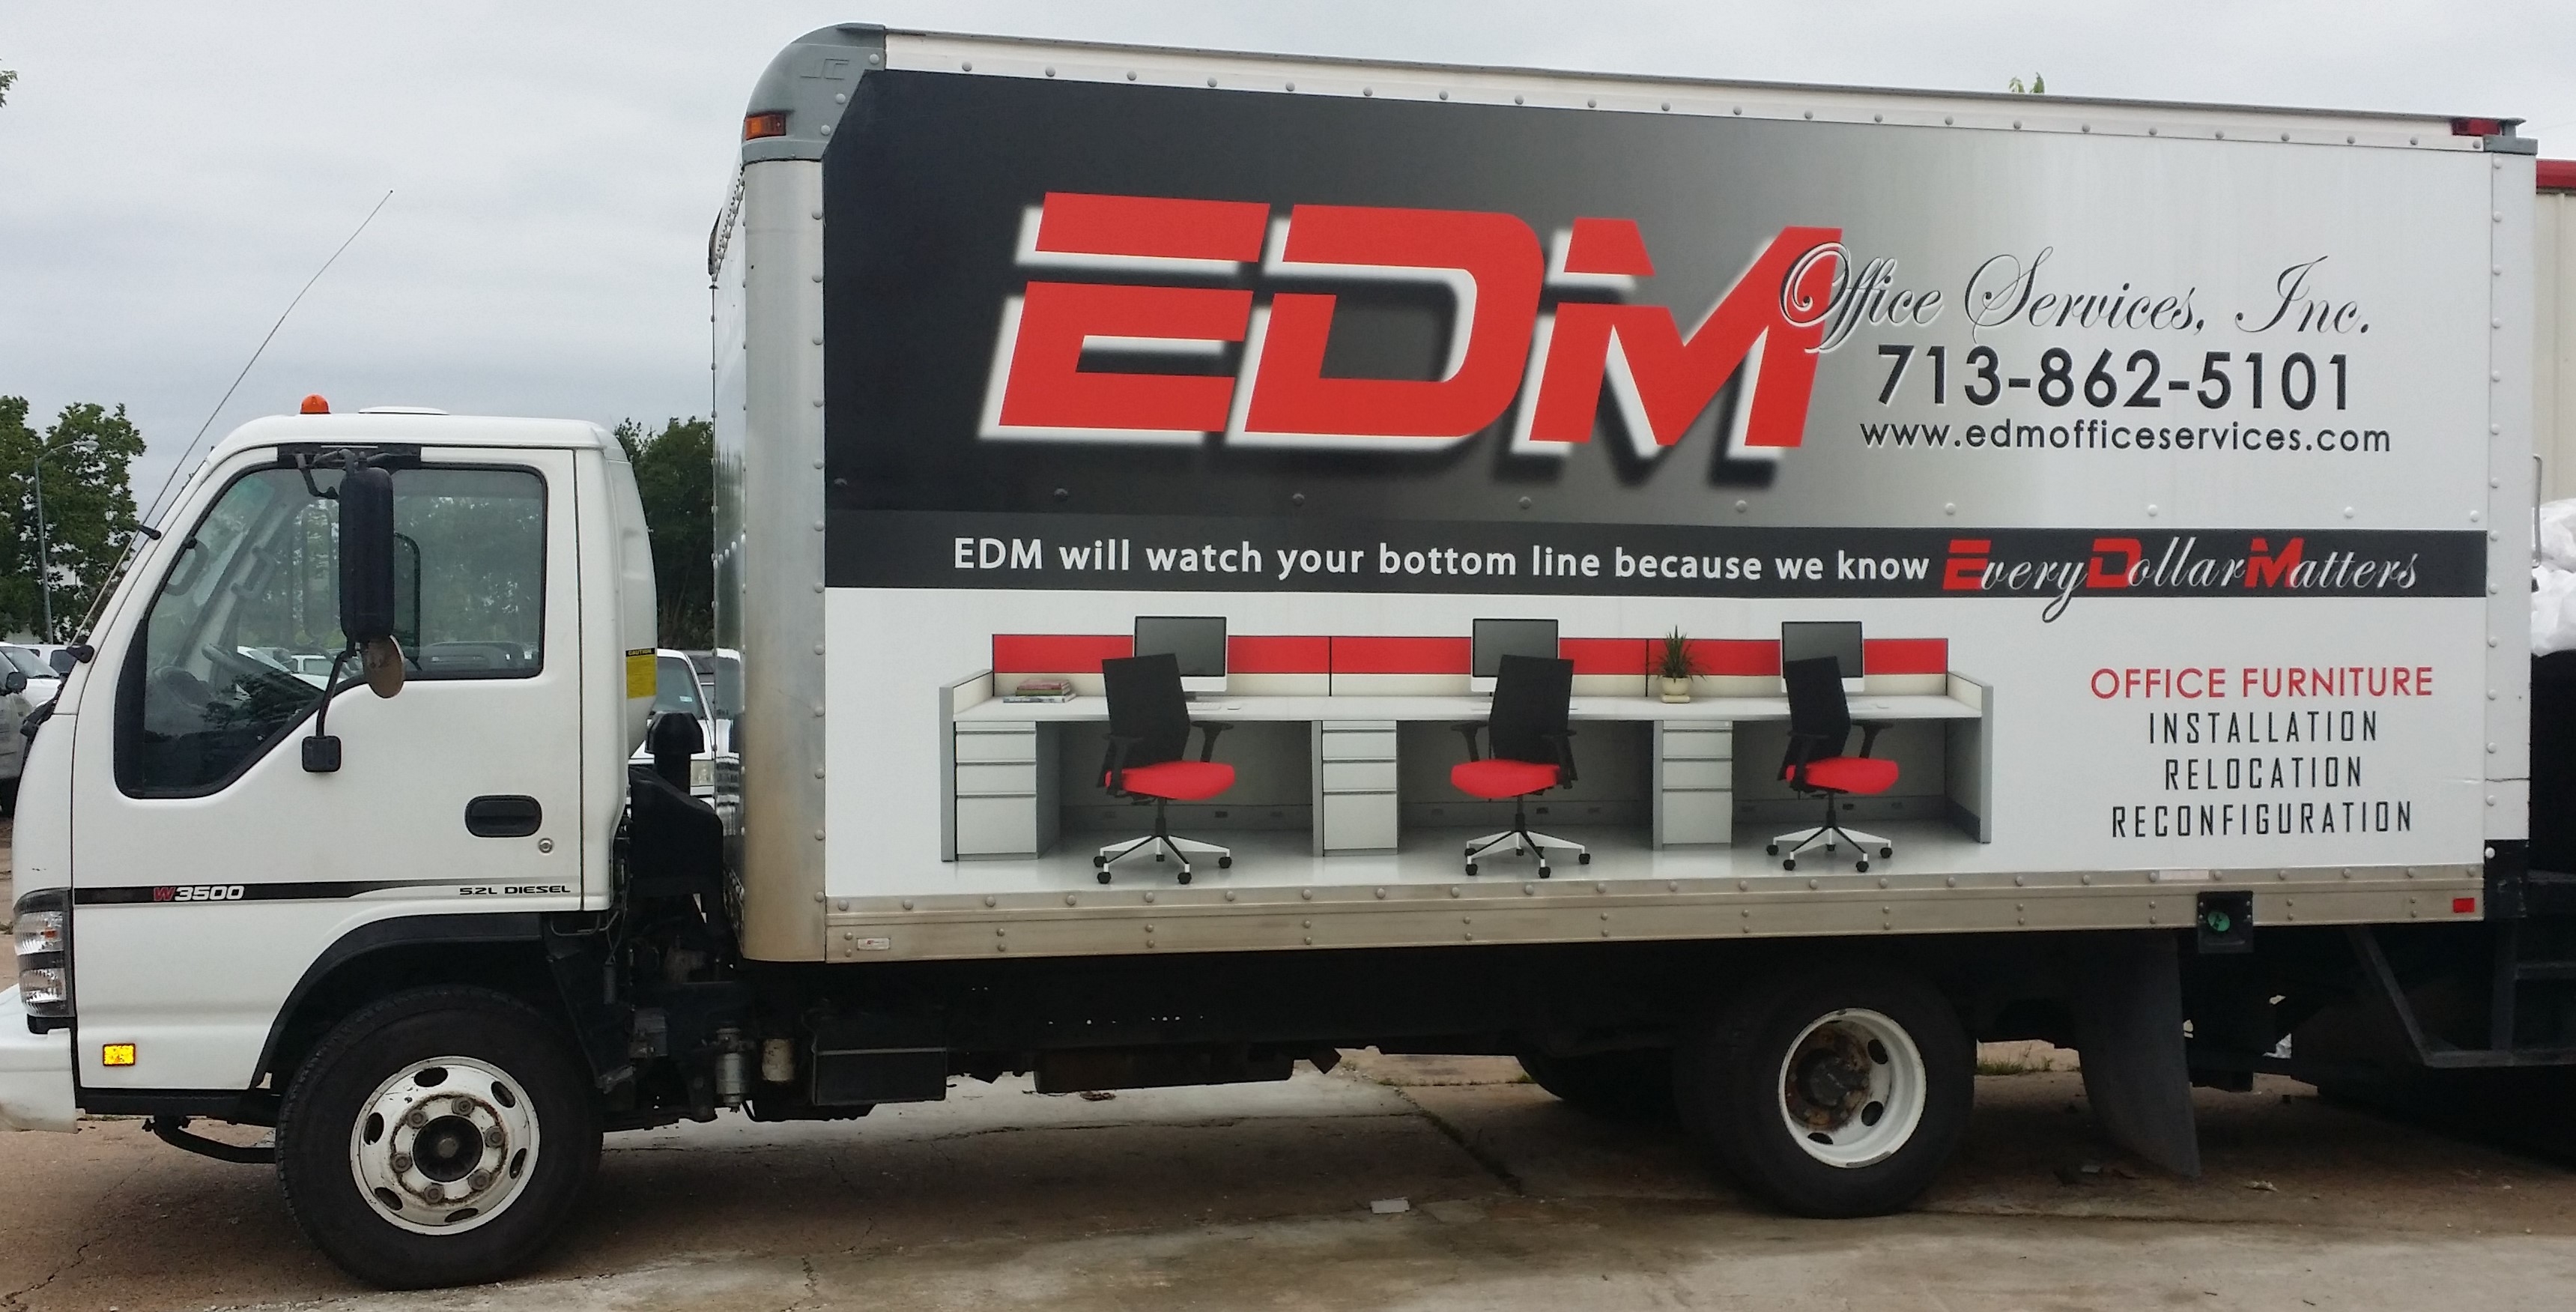 Edm Office Services, Inc. Photo